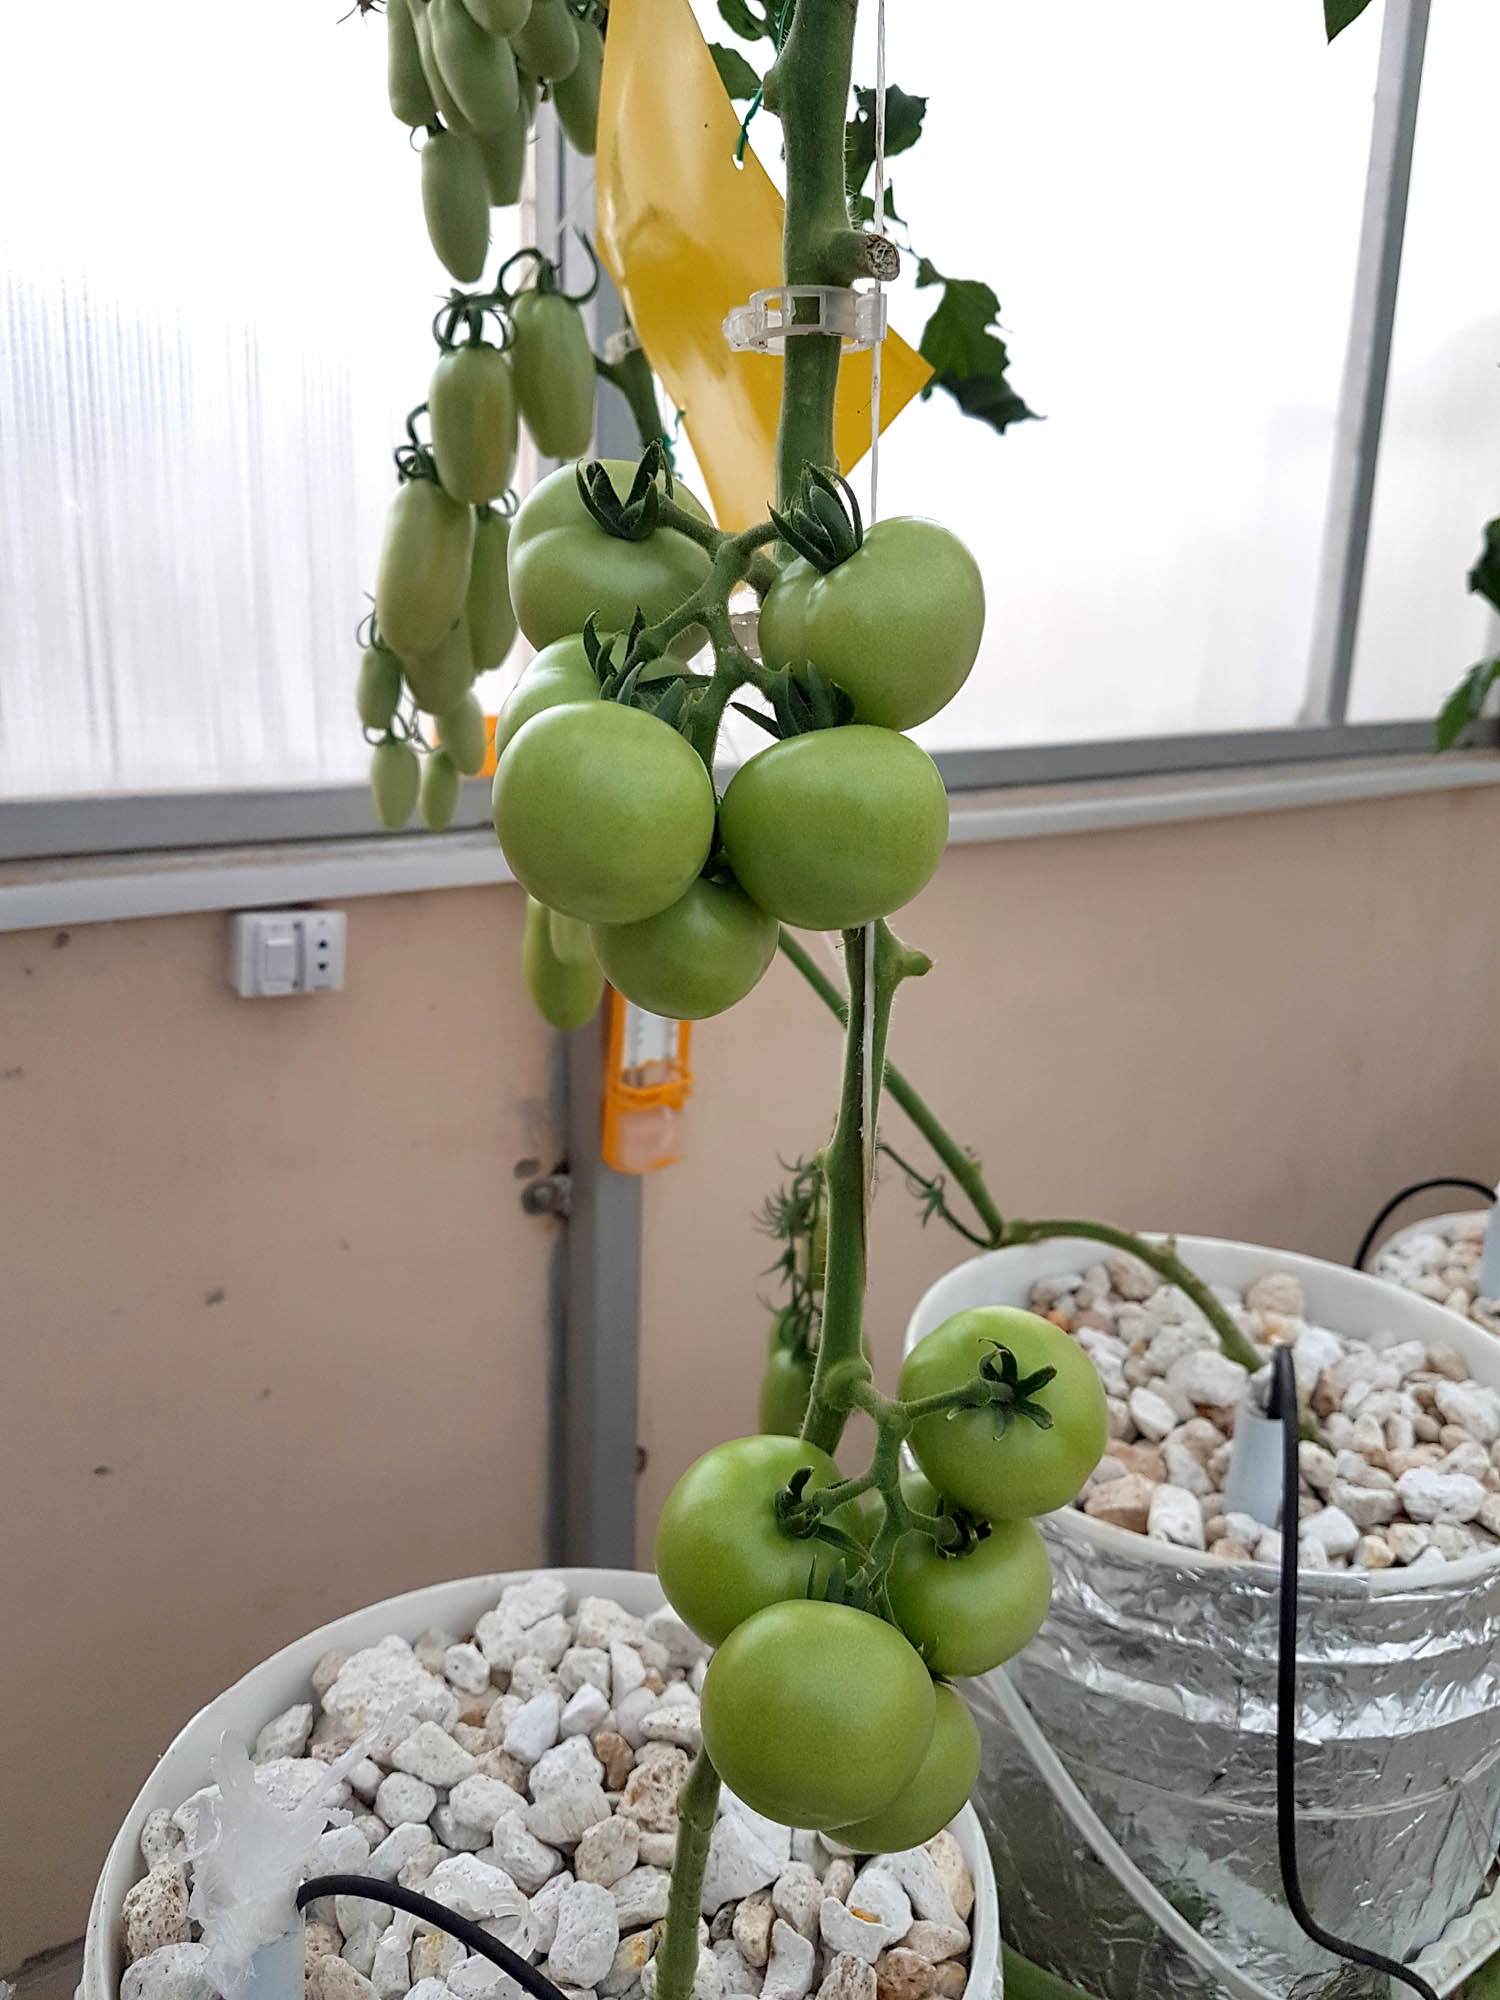 Tomato-Hellfrucht-German-Variety-Pakistan-Hydroponics-1